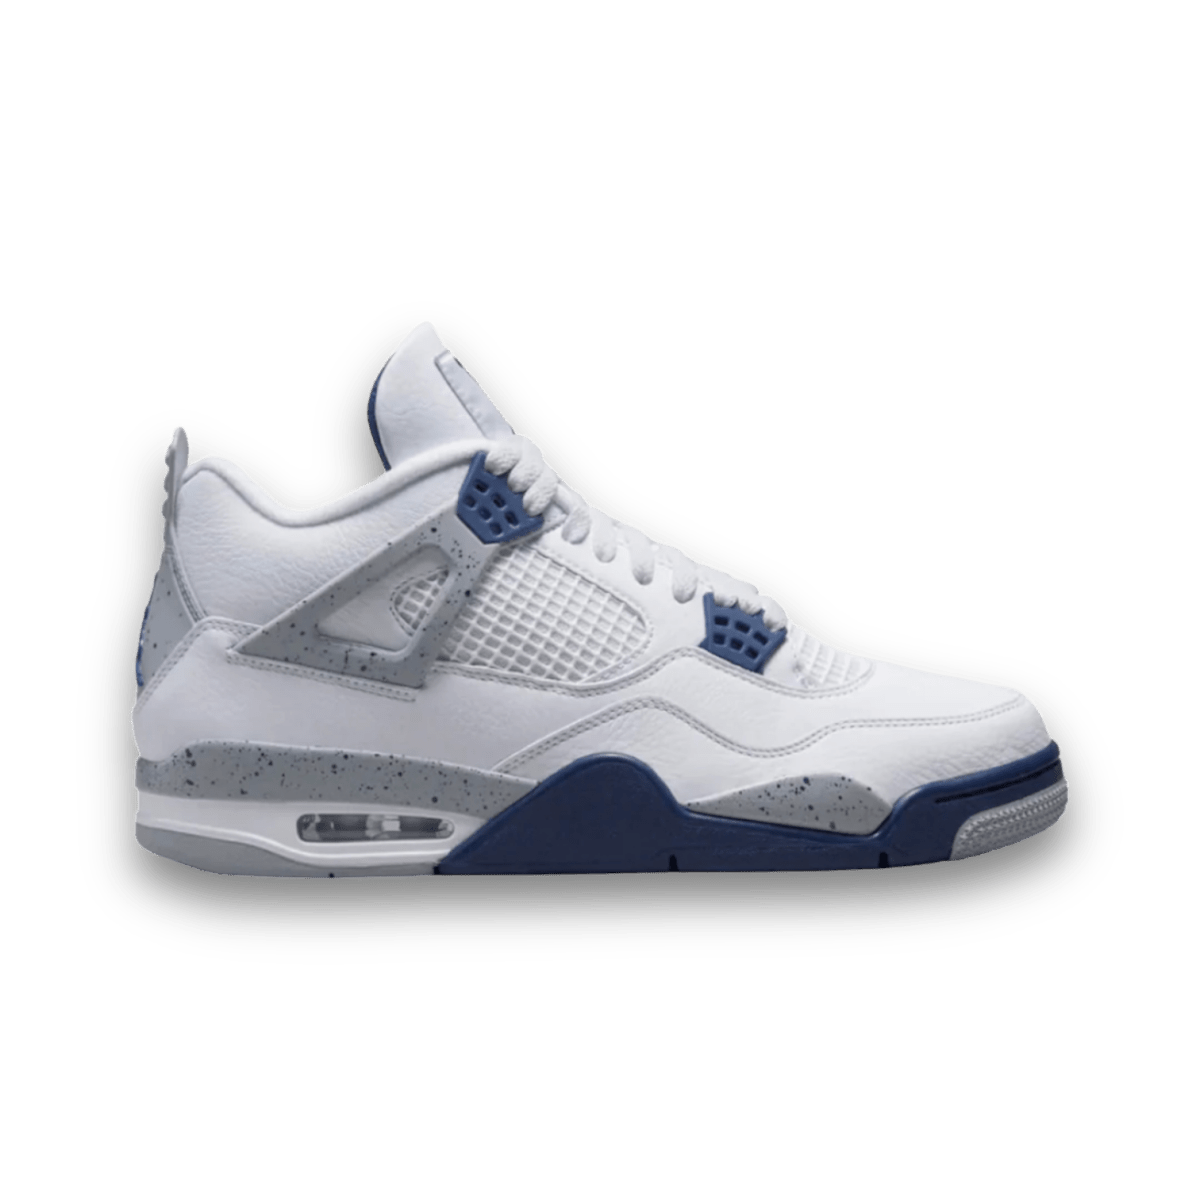 Air Jordan 4 Midnight Navy - Mid Sneaker - Jawns on Fire Sneakers & Streetwear